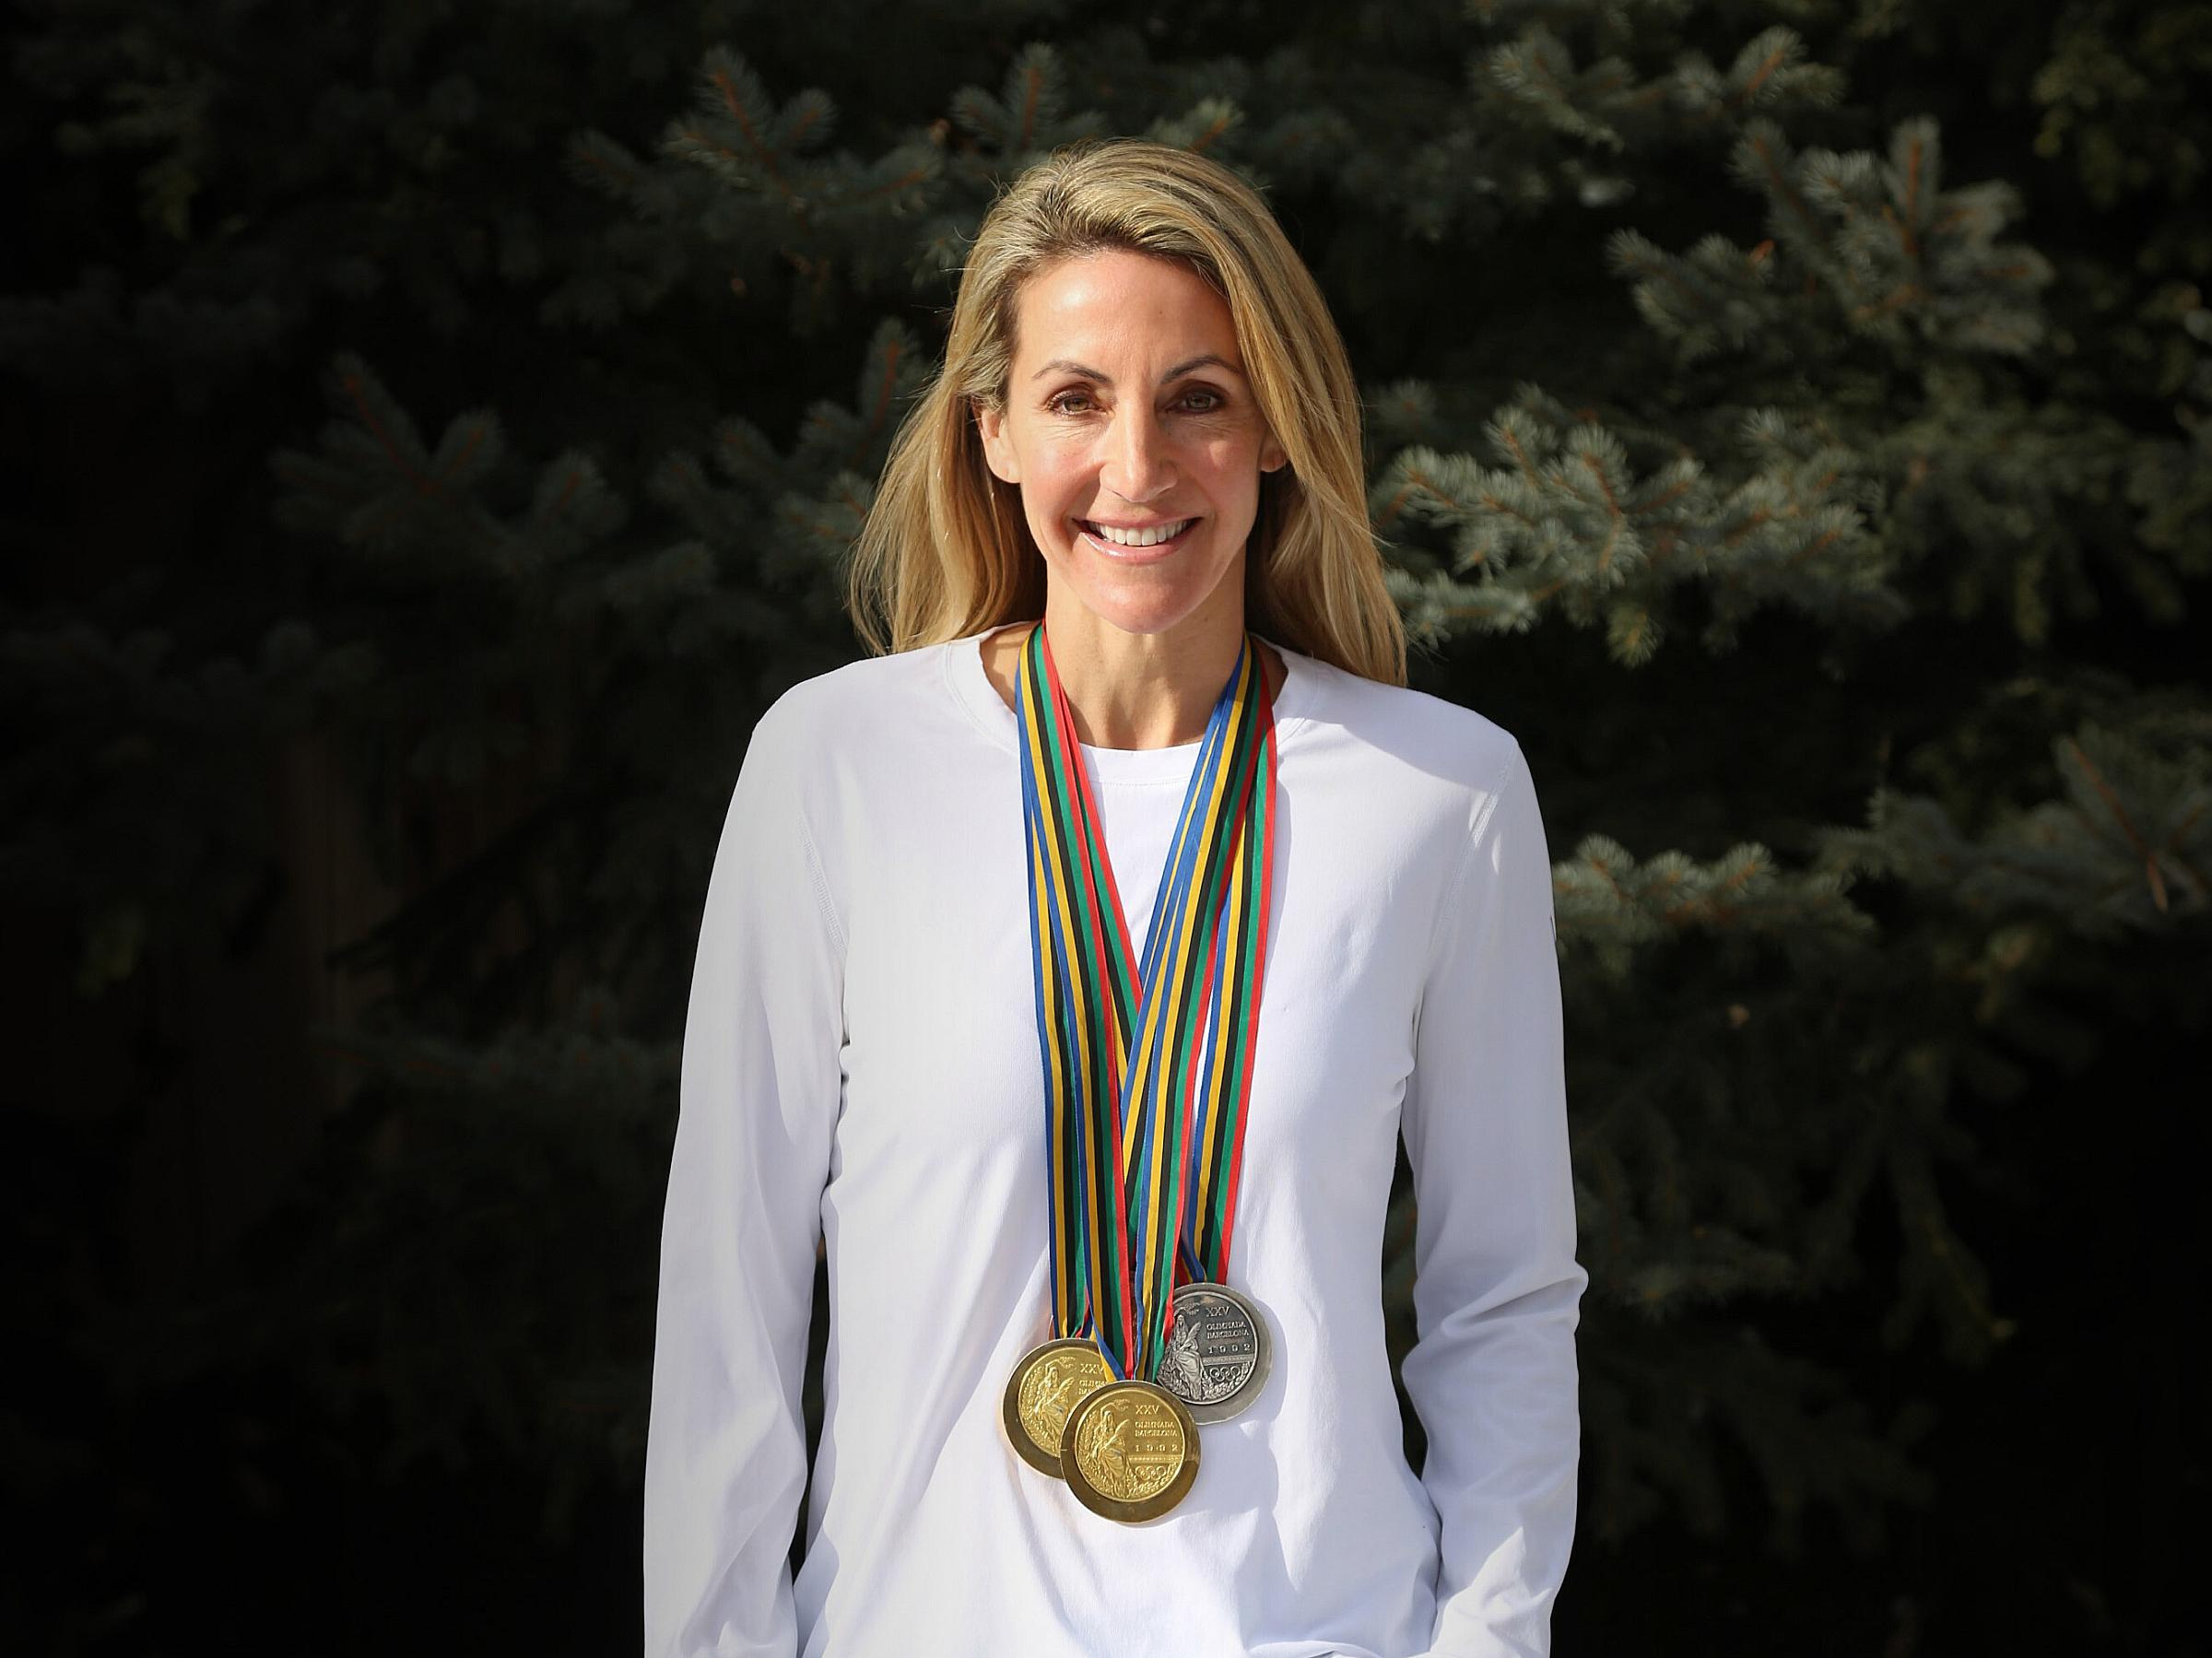 Summer Sanders wearing her Olympic medals